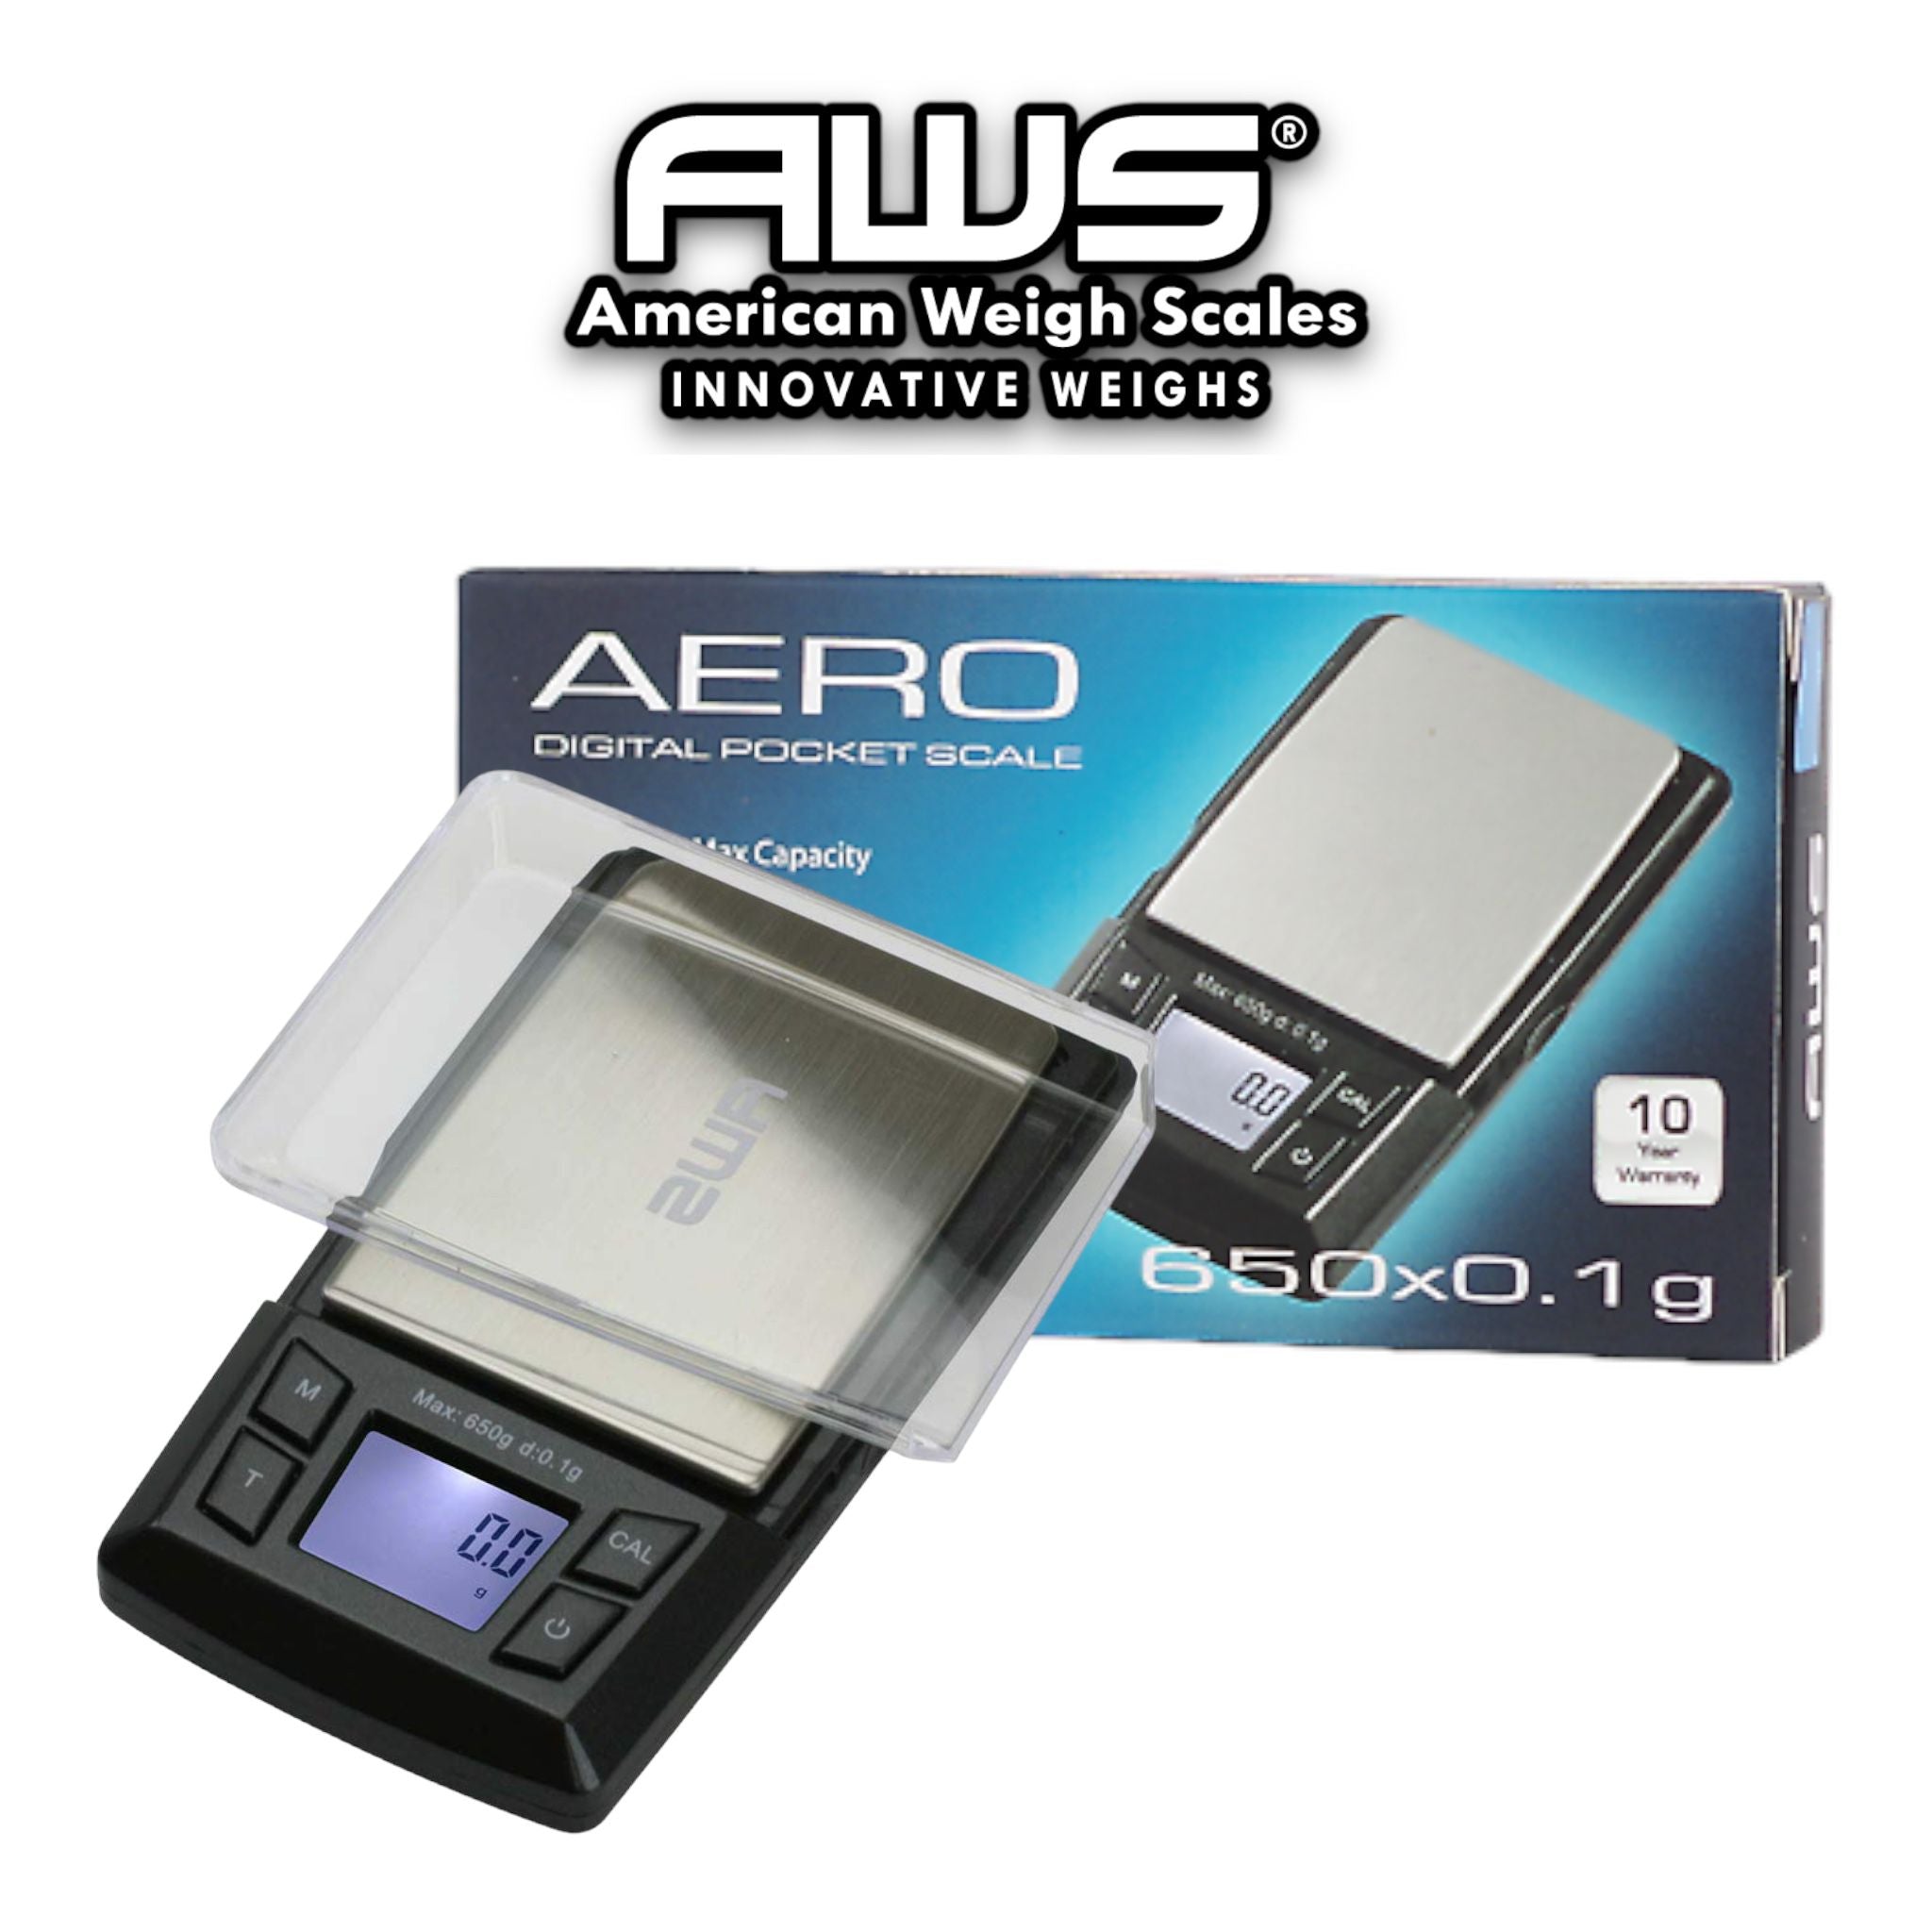 AWS-1KG-BLK - American Weigh Scales Digital Pocket Scale Black